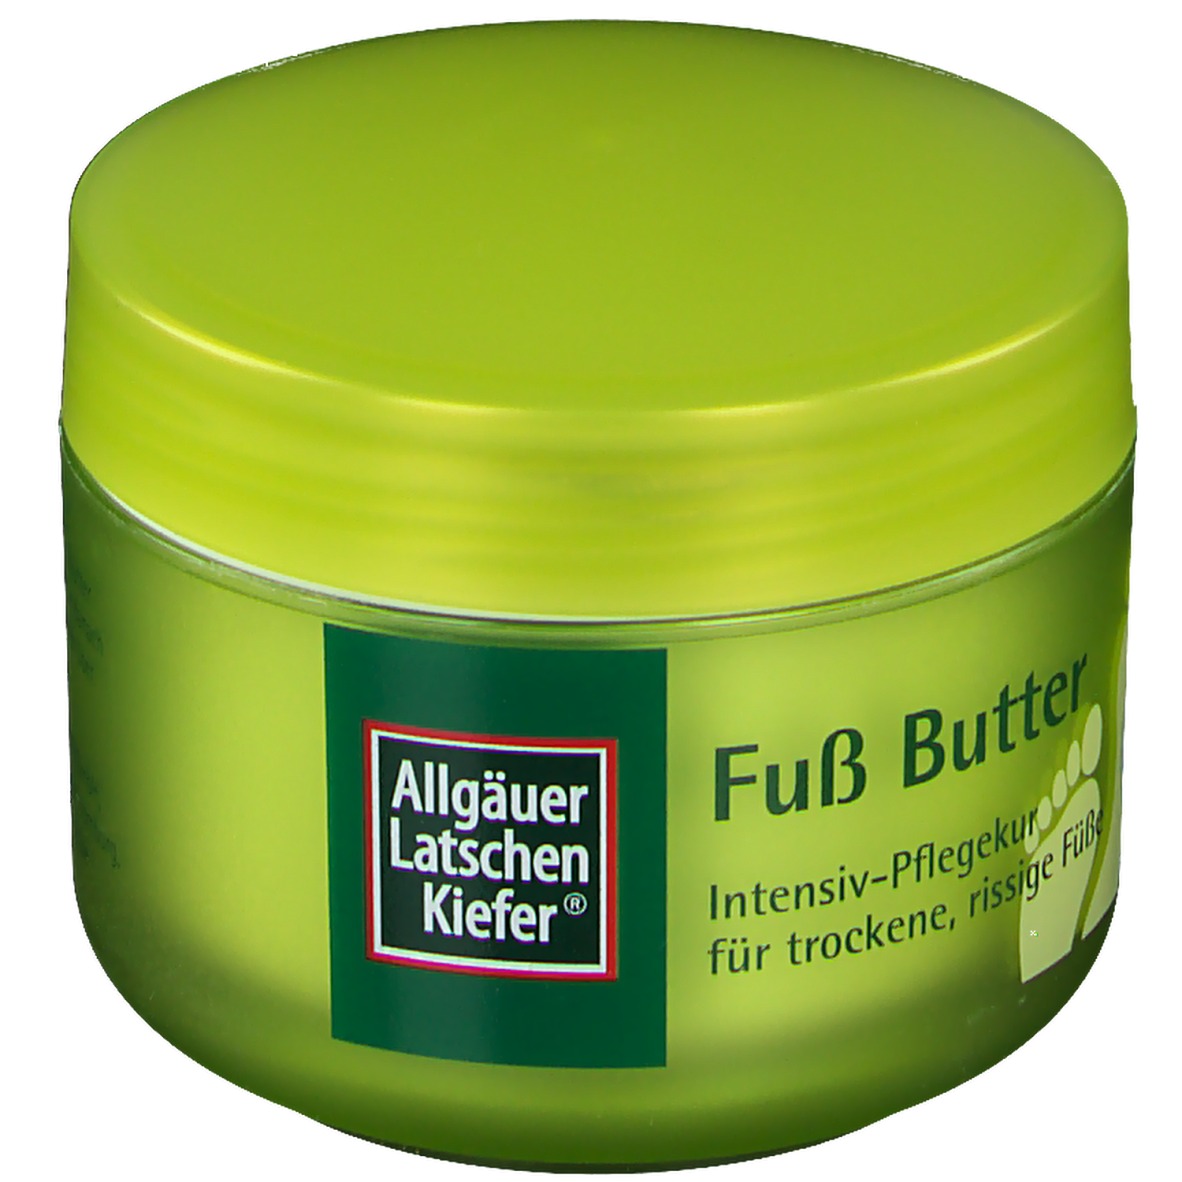 Allgäuer Latschenkiefer® Fuß Butter 200 ml - shop-apotheke.at